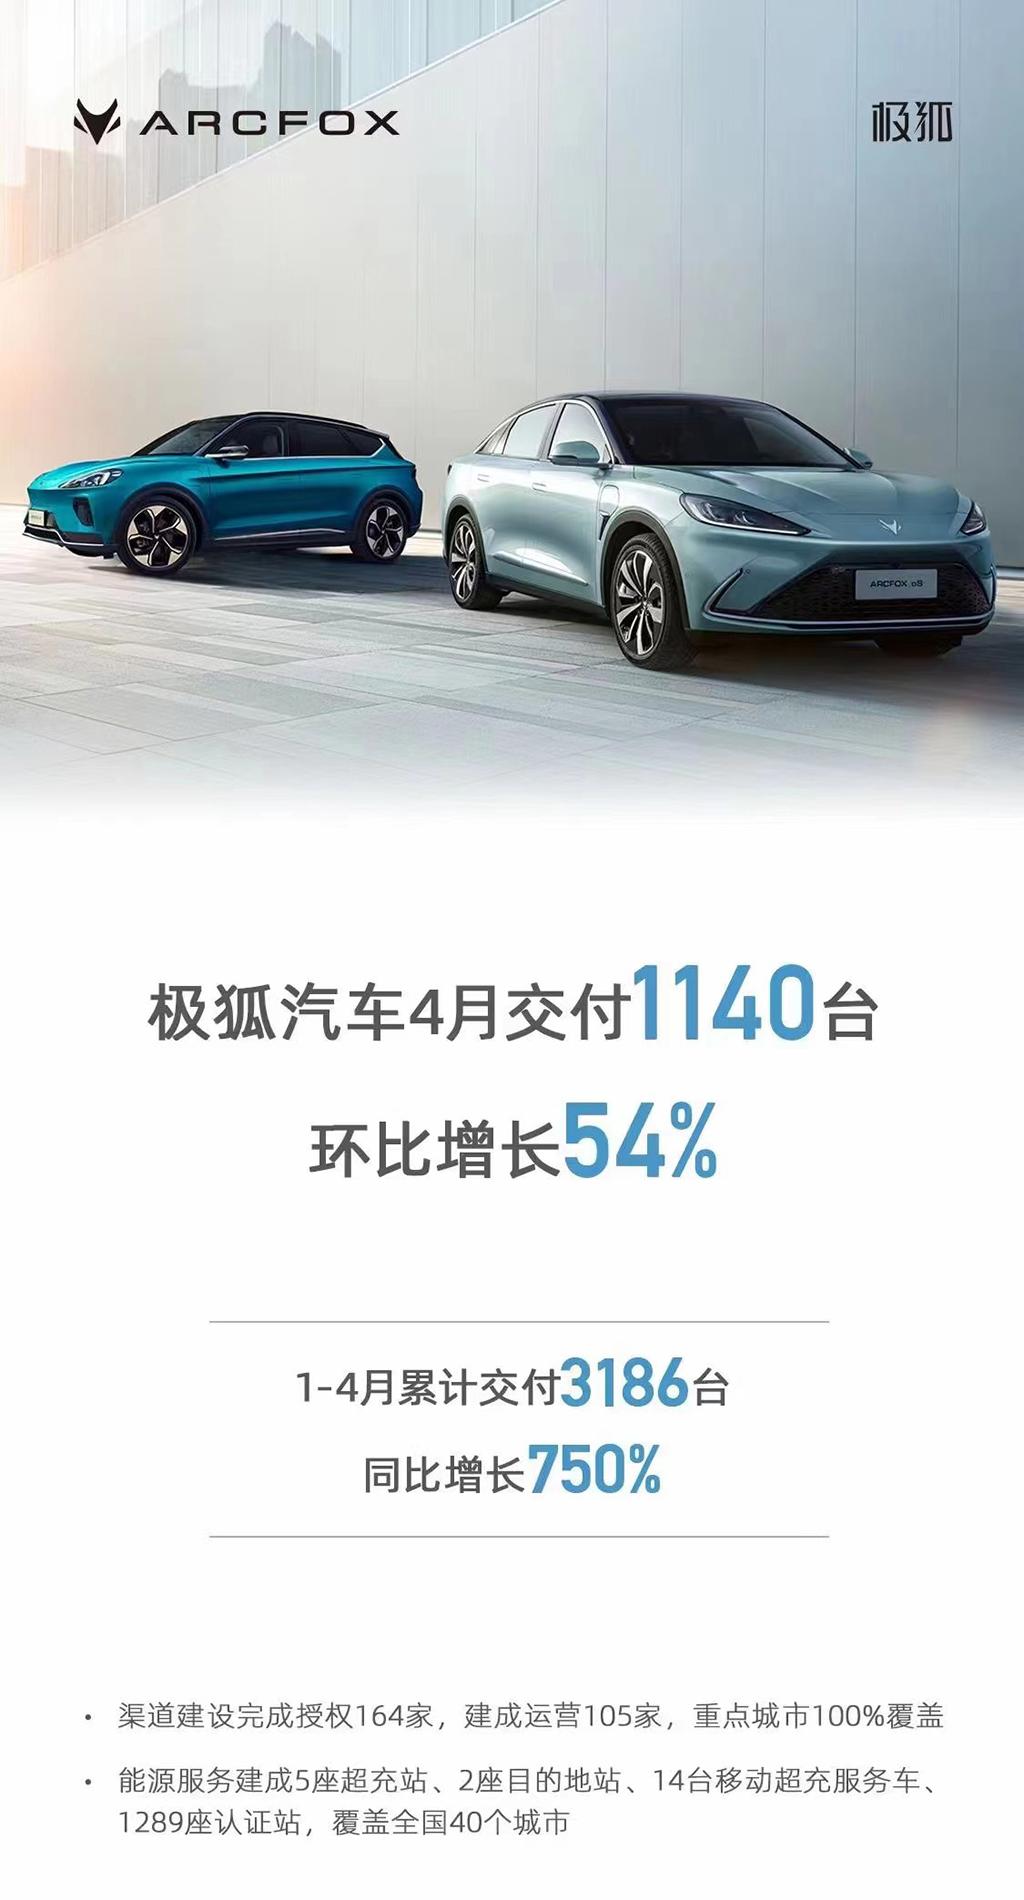 ARCFOX极狐4月份交付新车1140辆 环比增长54%